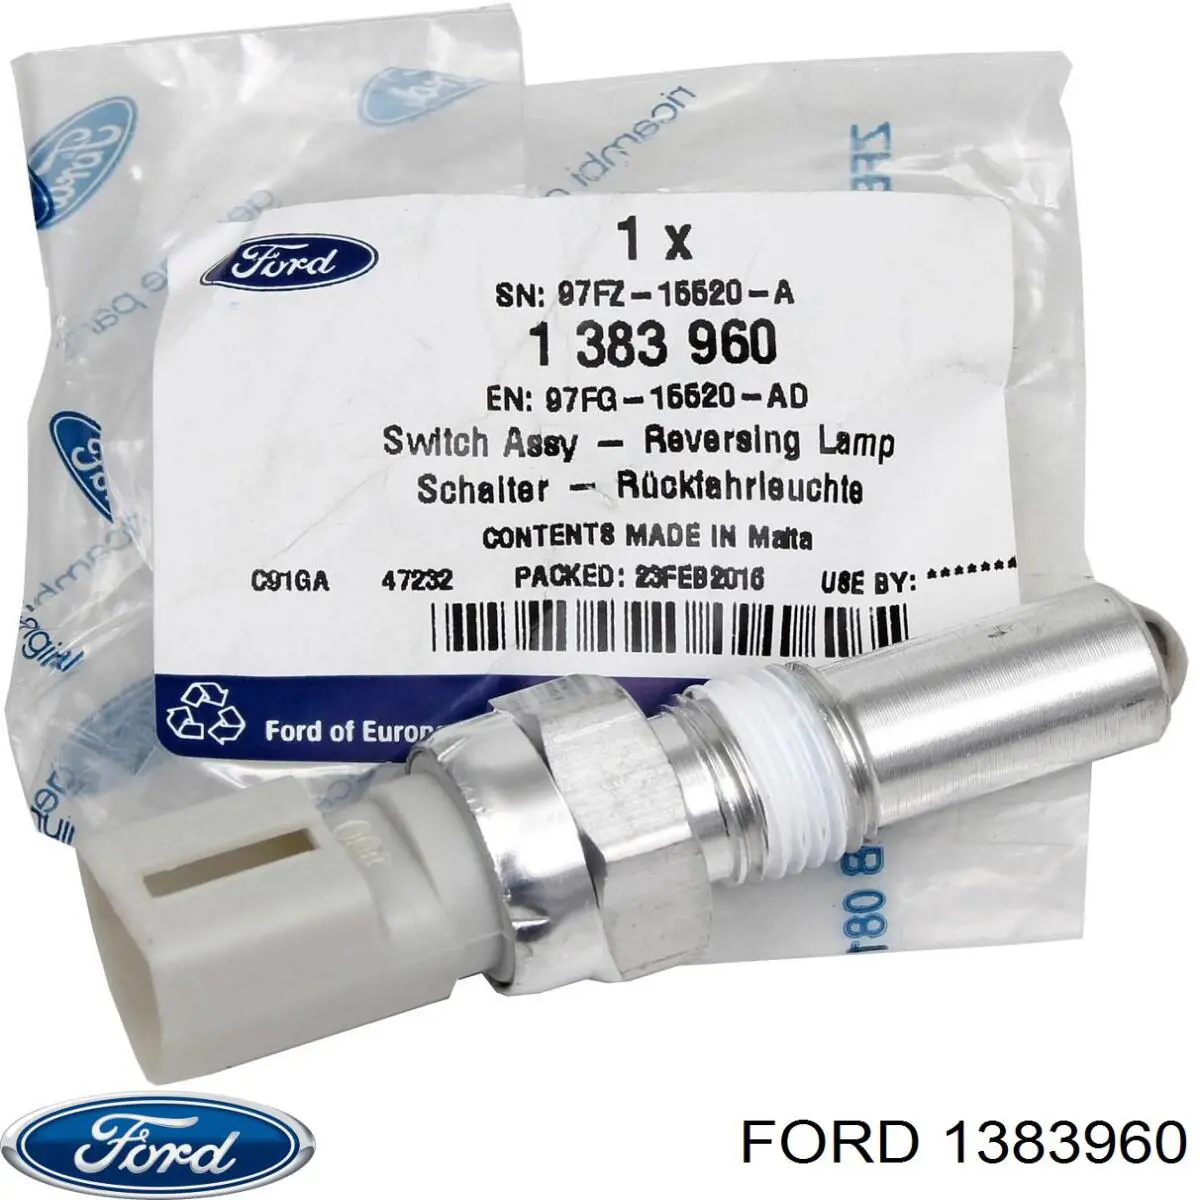 1383960 Ford датчик включения фонарей заднего хода